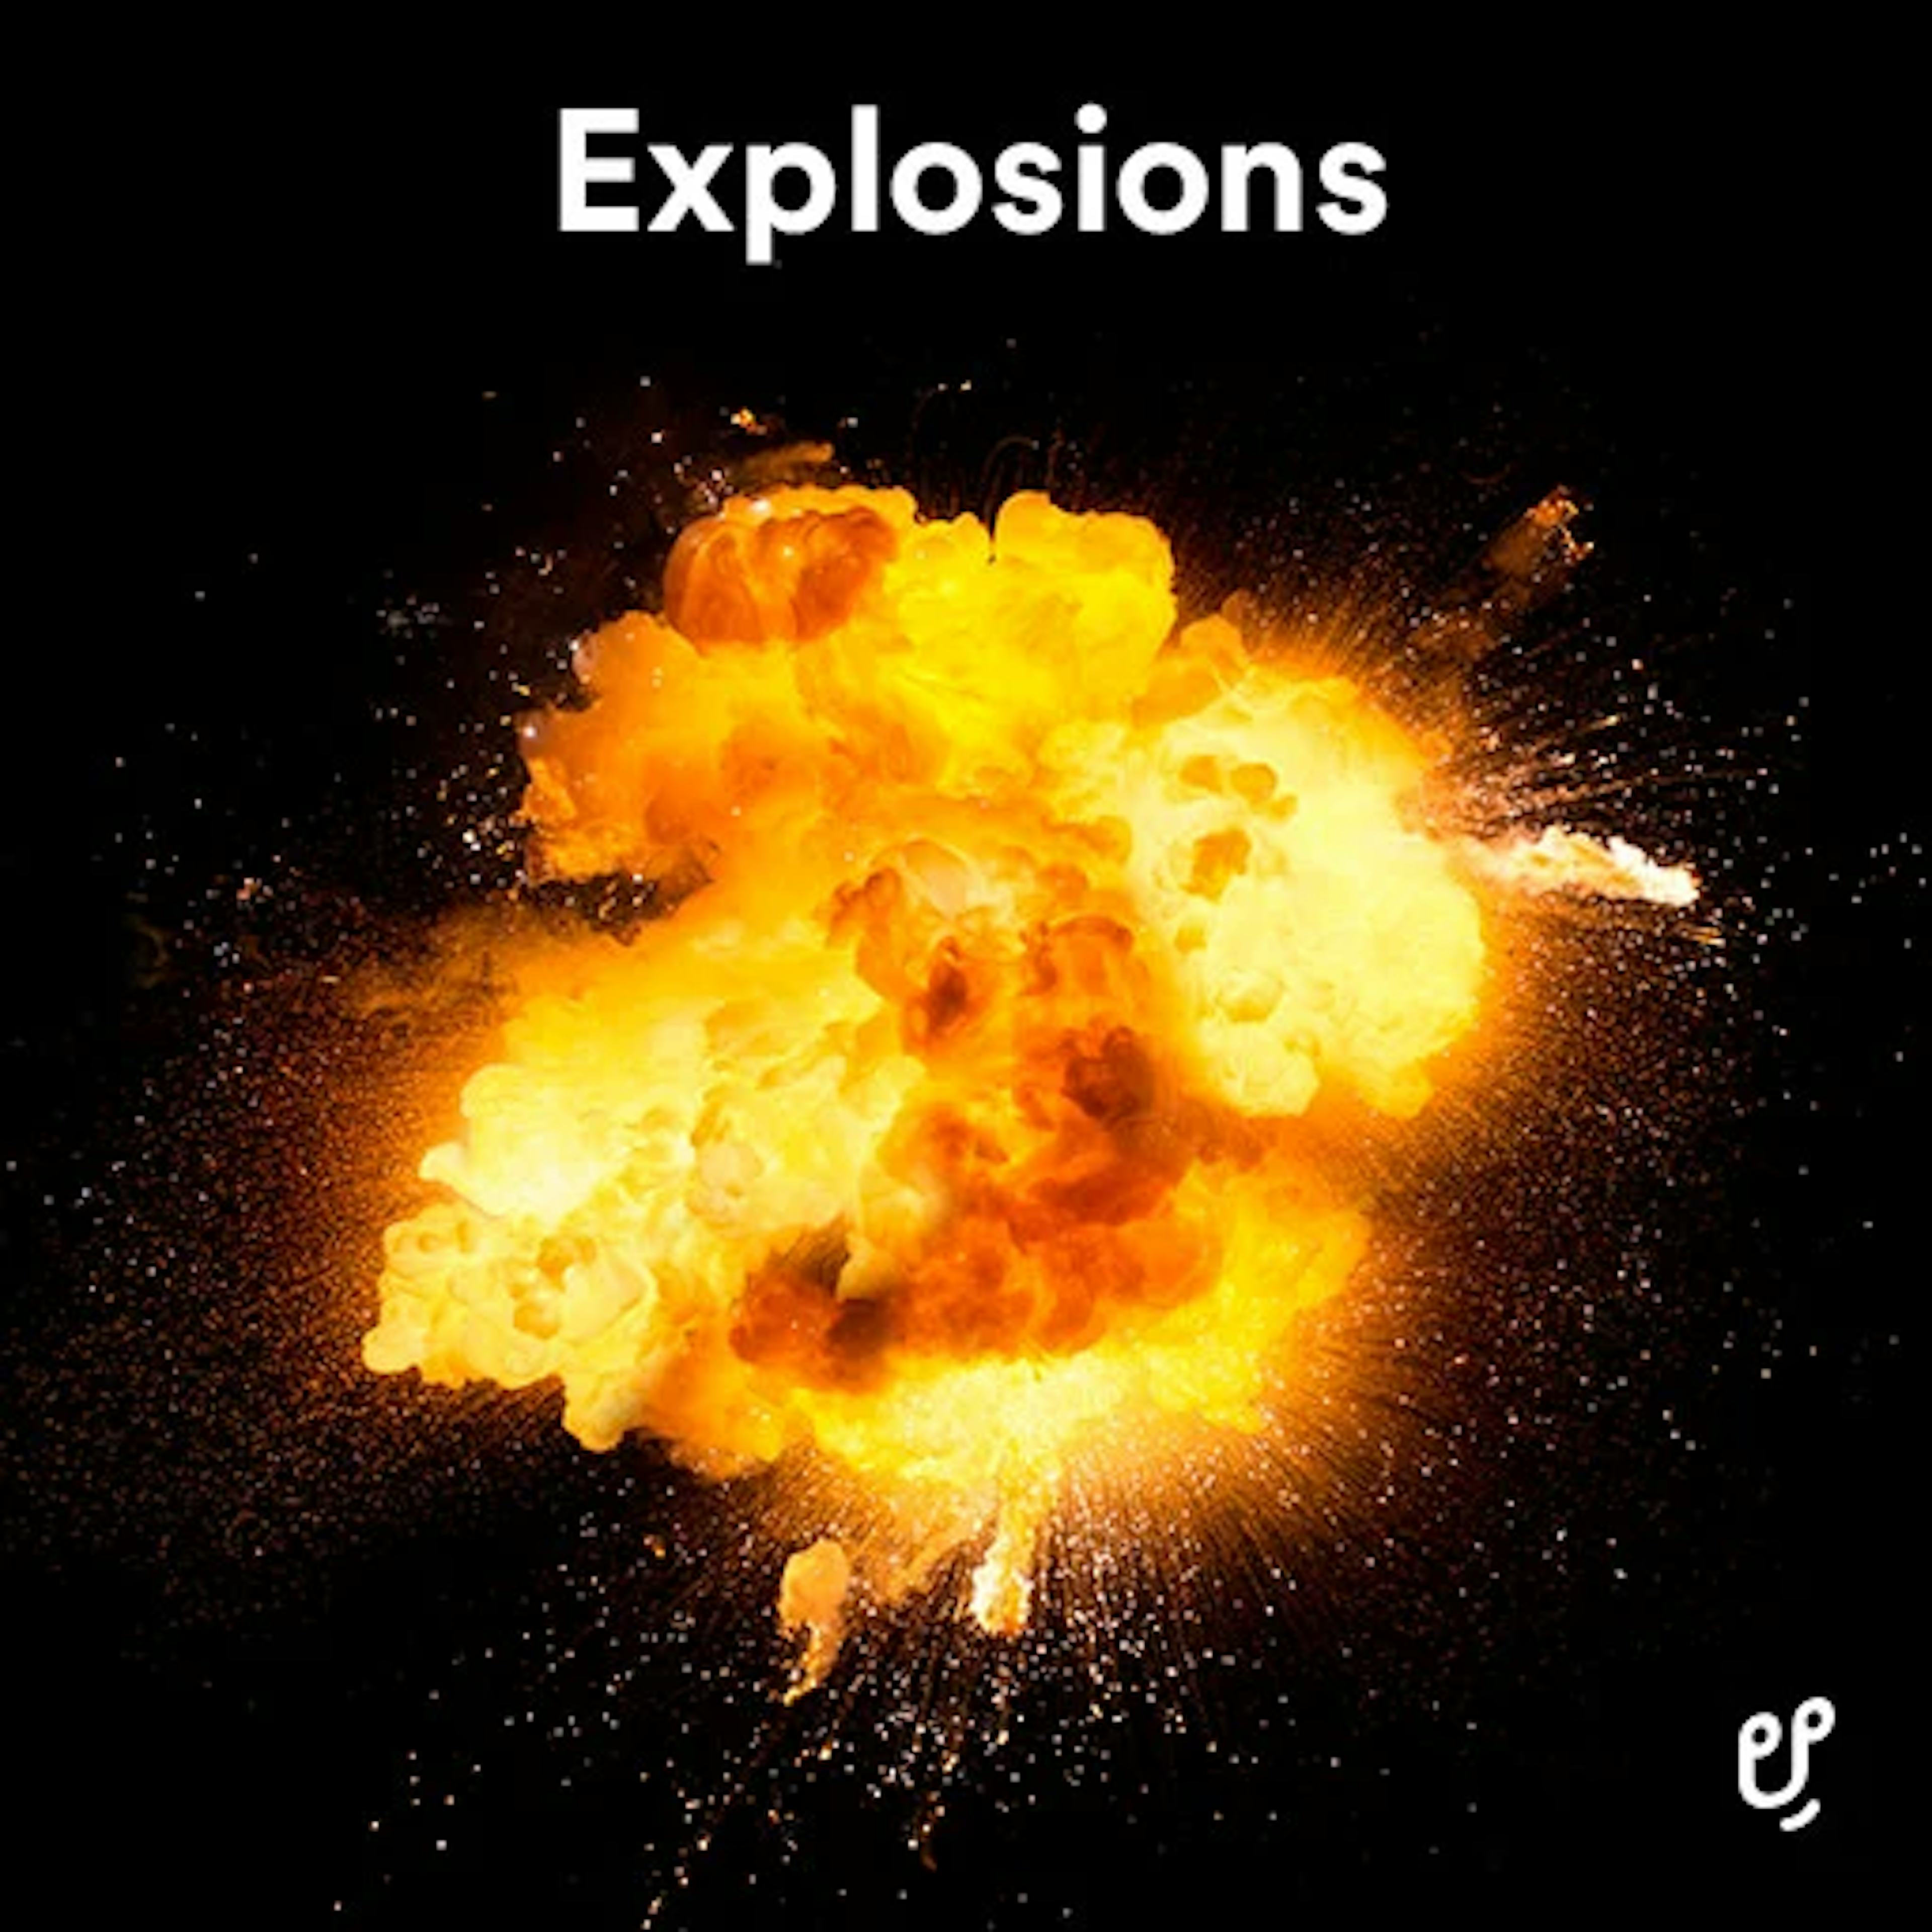 Explosions artwork